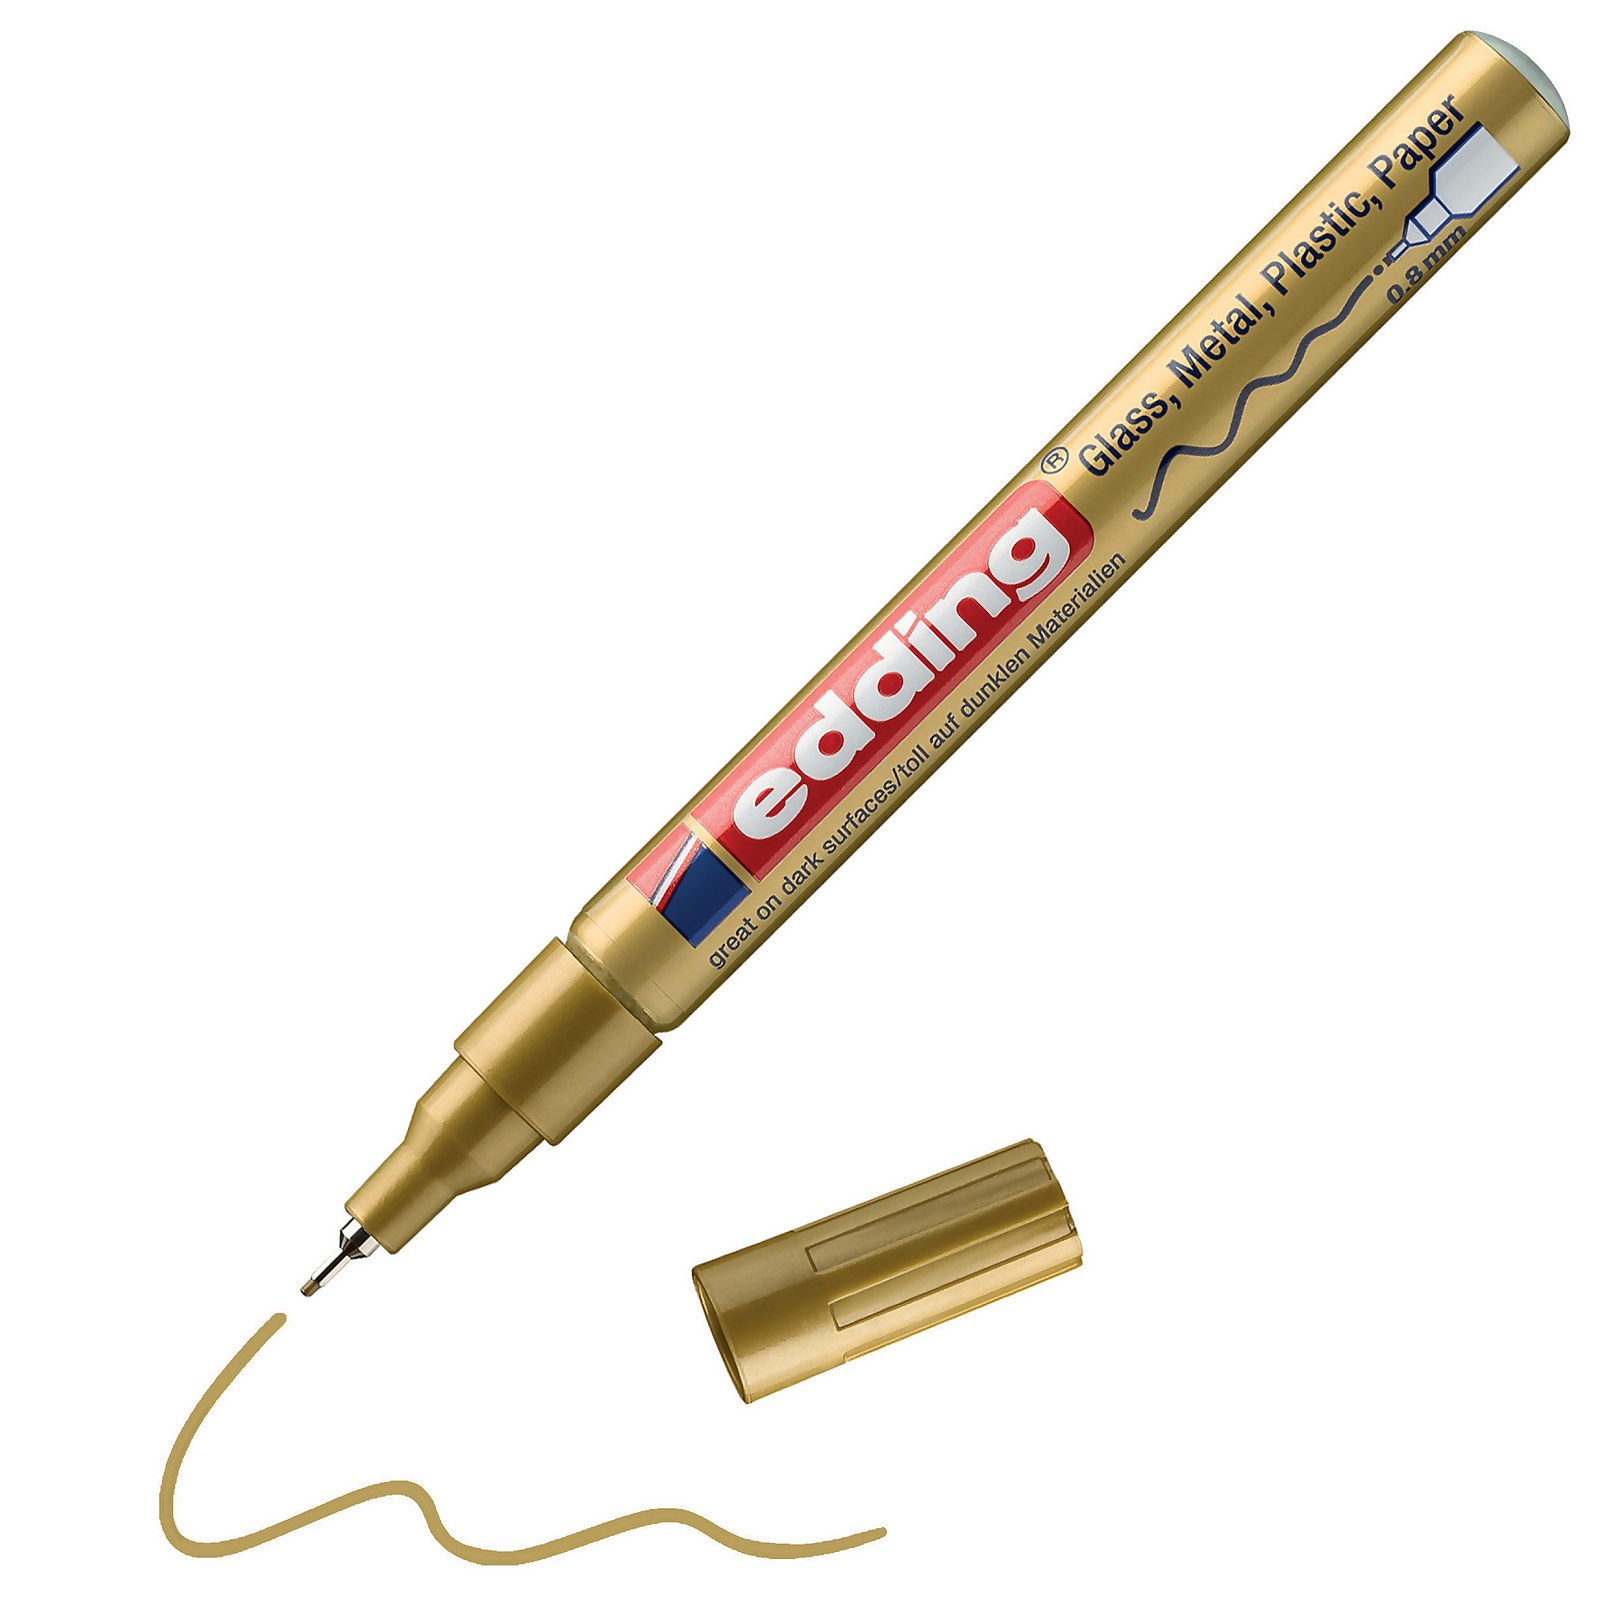 Photo of Edding 780 Paint Marker Pen Gold